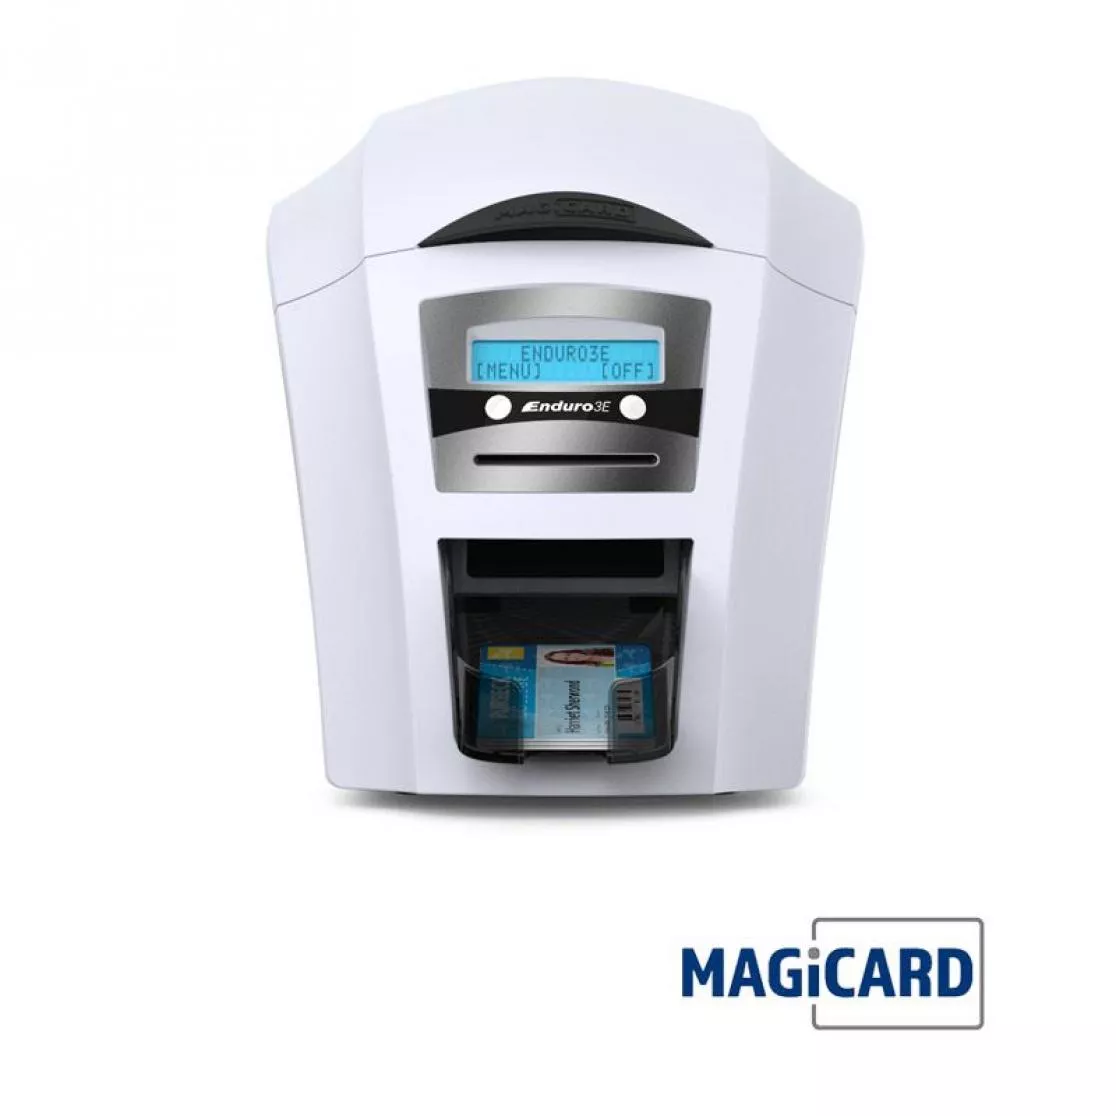 plastic card printer Magicard Enduro 3e